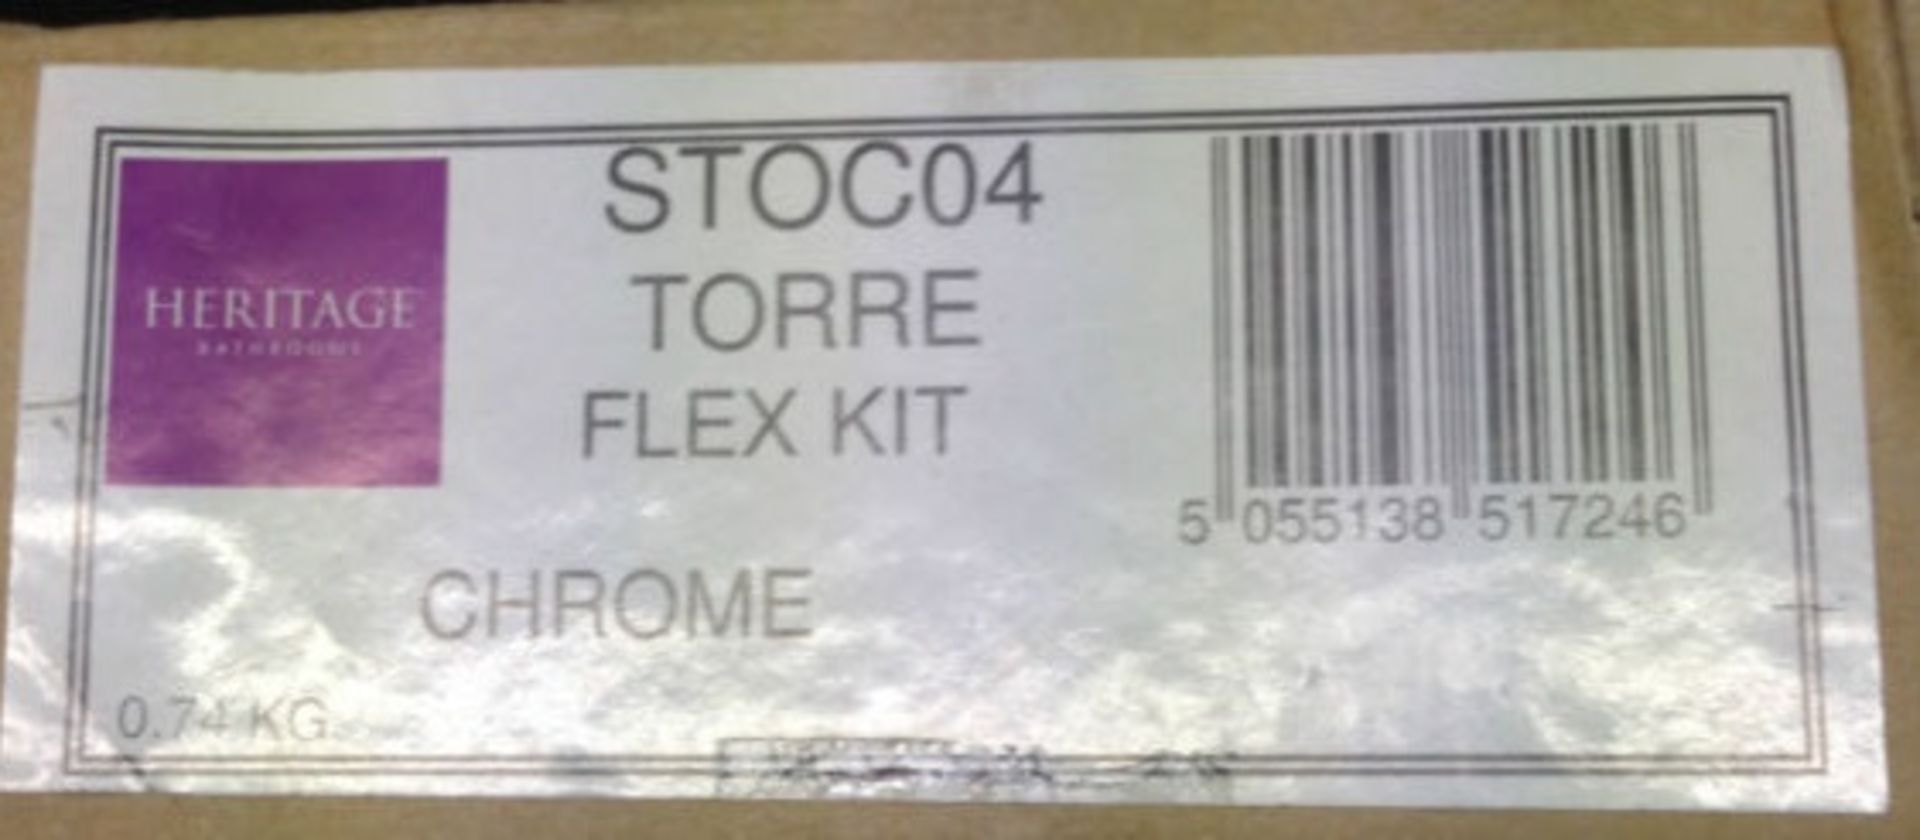 1 x Heritage STOC04 Torre Flex Kit Chrome Shower Riser, Hose & Shower Head - Polished CHrome - Image 2 of 3